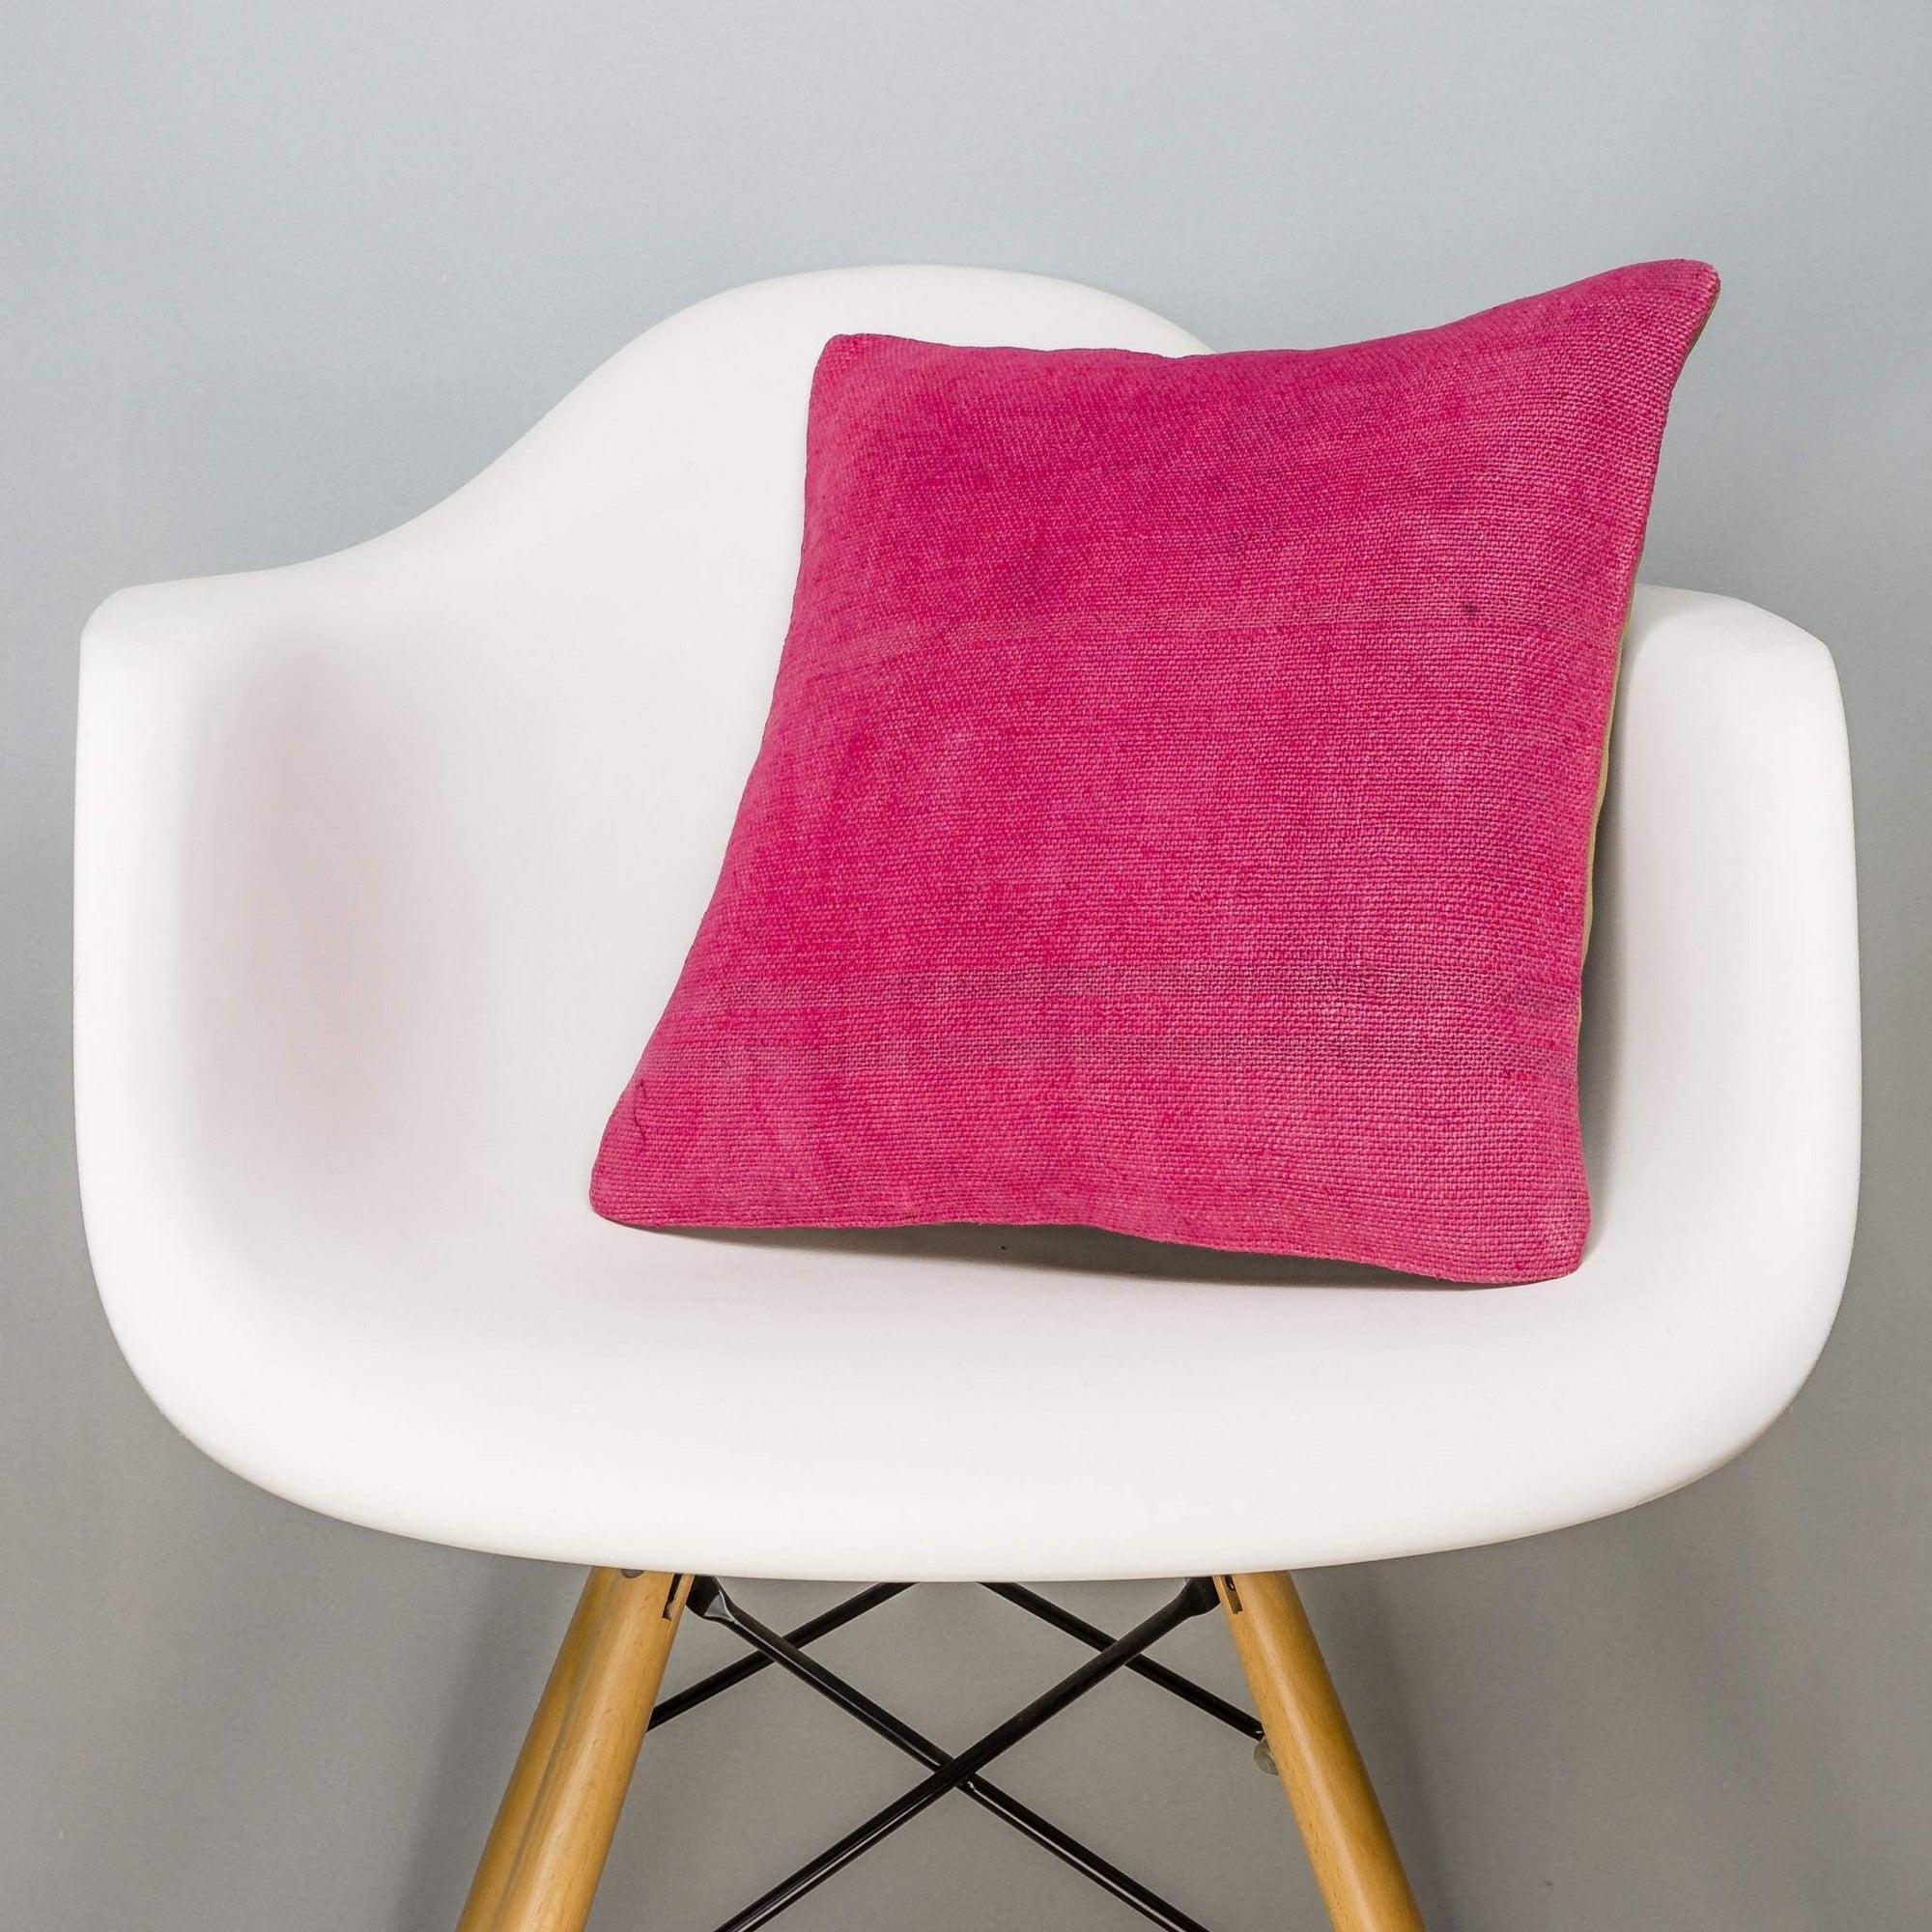 Plain Pink Kilim Pillow Cover 16x16 3009 - kilimpillowstore
 - 1